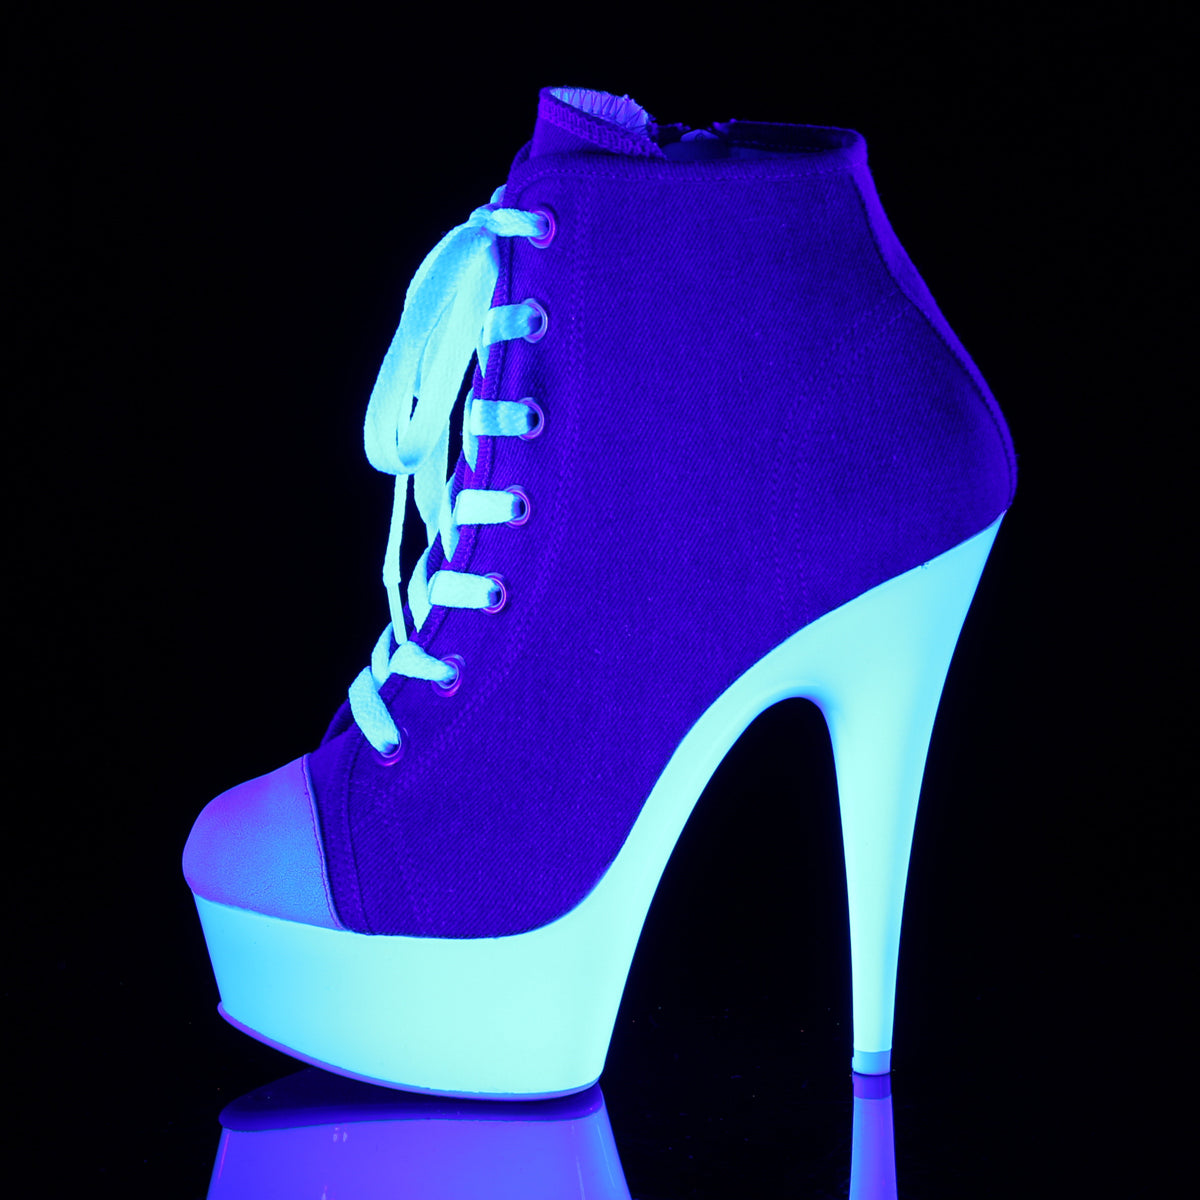 Pleaser Botas de tobillo para mujer DELIGHT-600sk-02 Denim Blue Canvas / Neon White